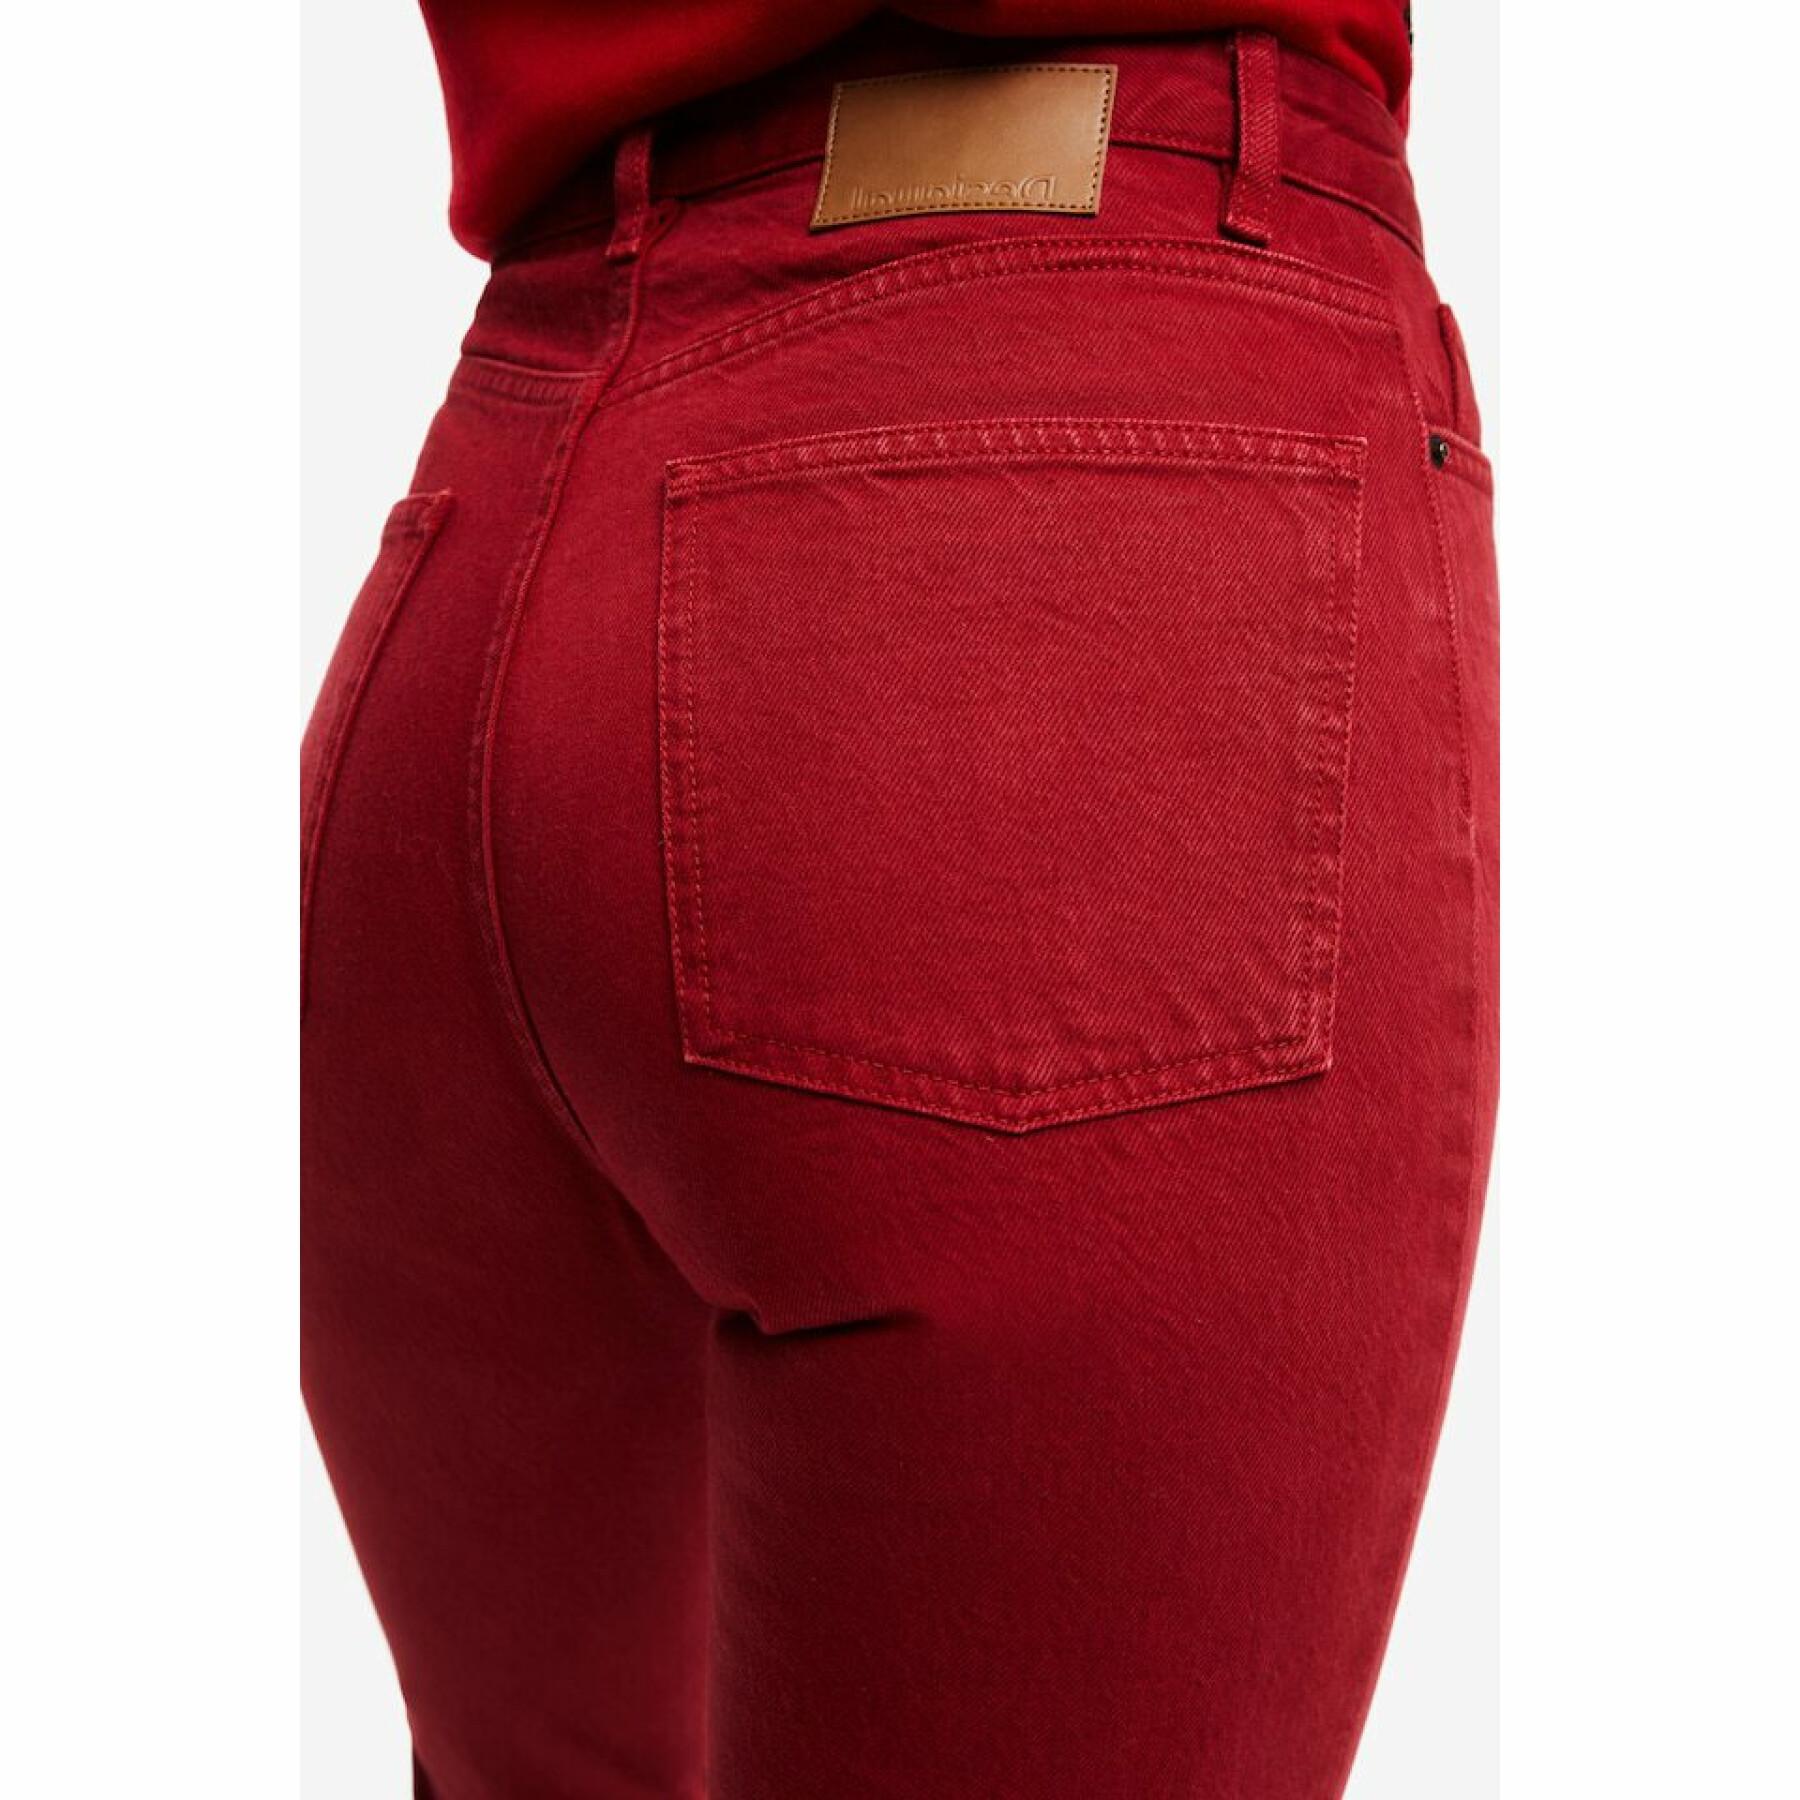 Women's pants Desigual Javiera